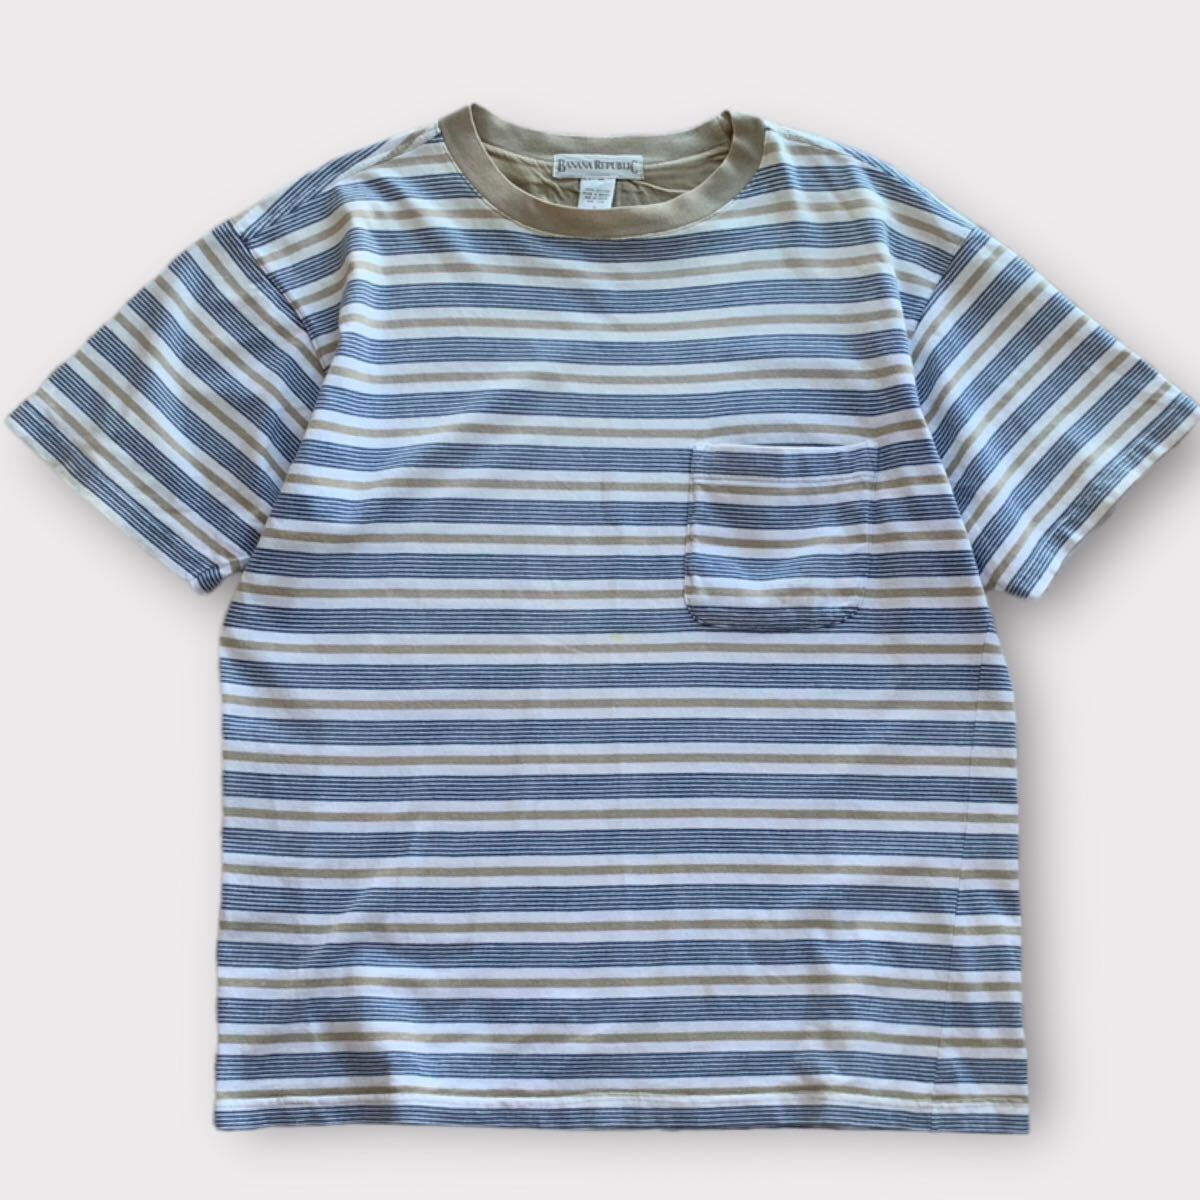 80's 90's BANANA REPUBLIC マルチボーダー ポケットTシャツ 白×青×金 ビンテージ オールド バナリパ ポケT_画像1